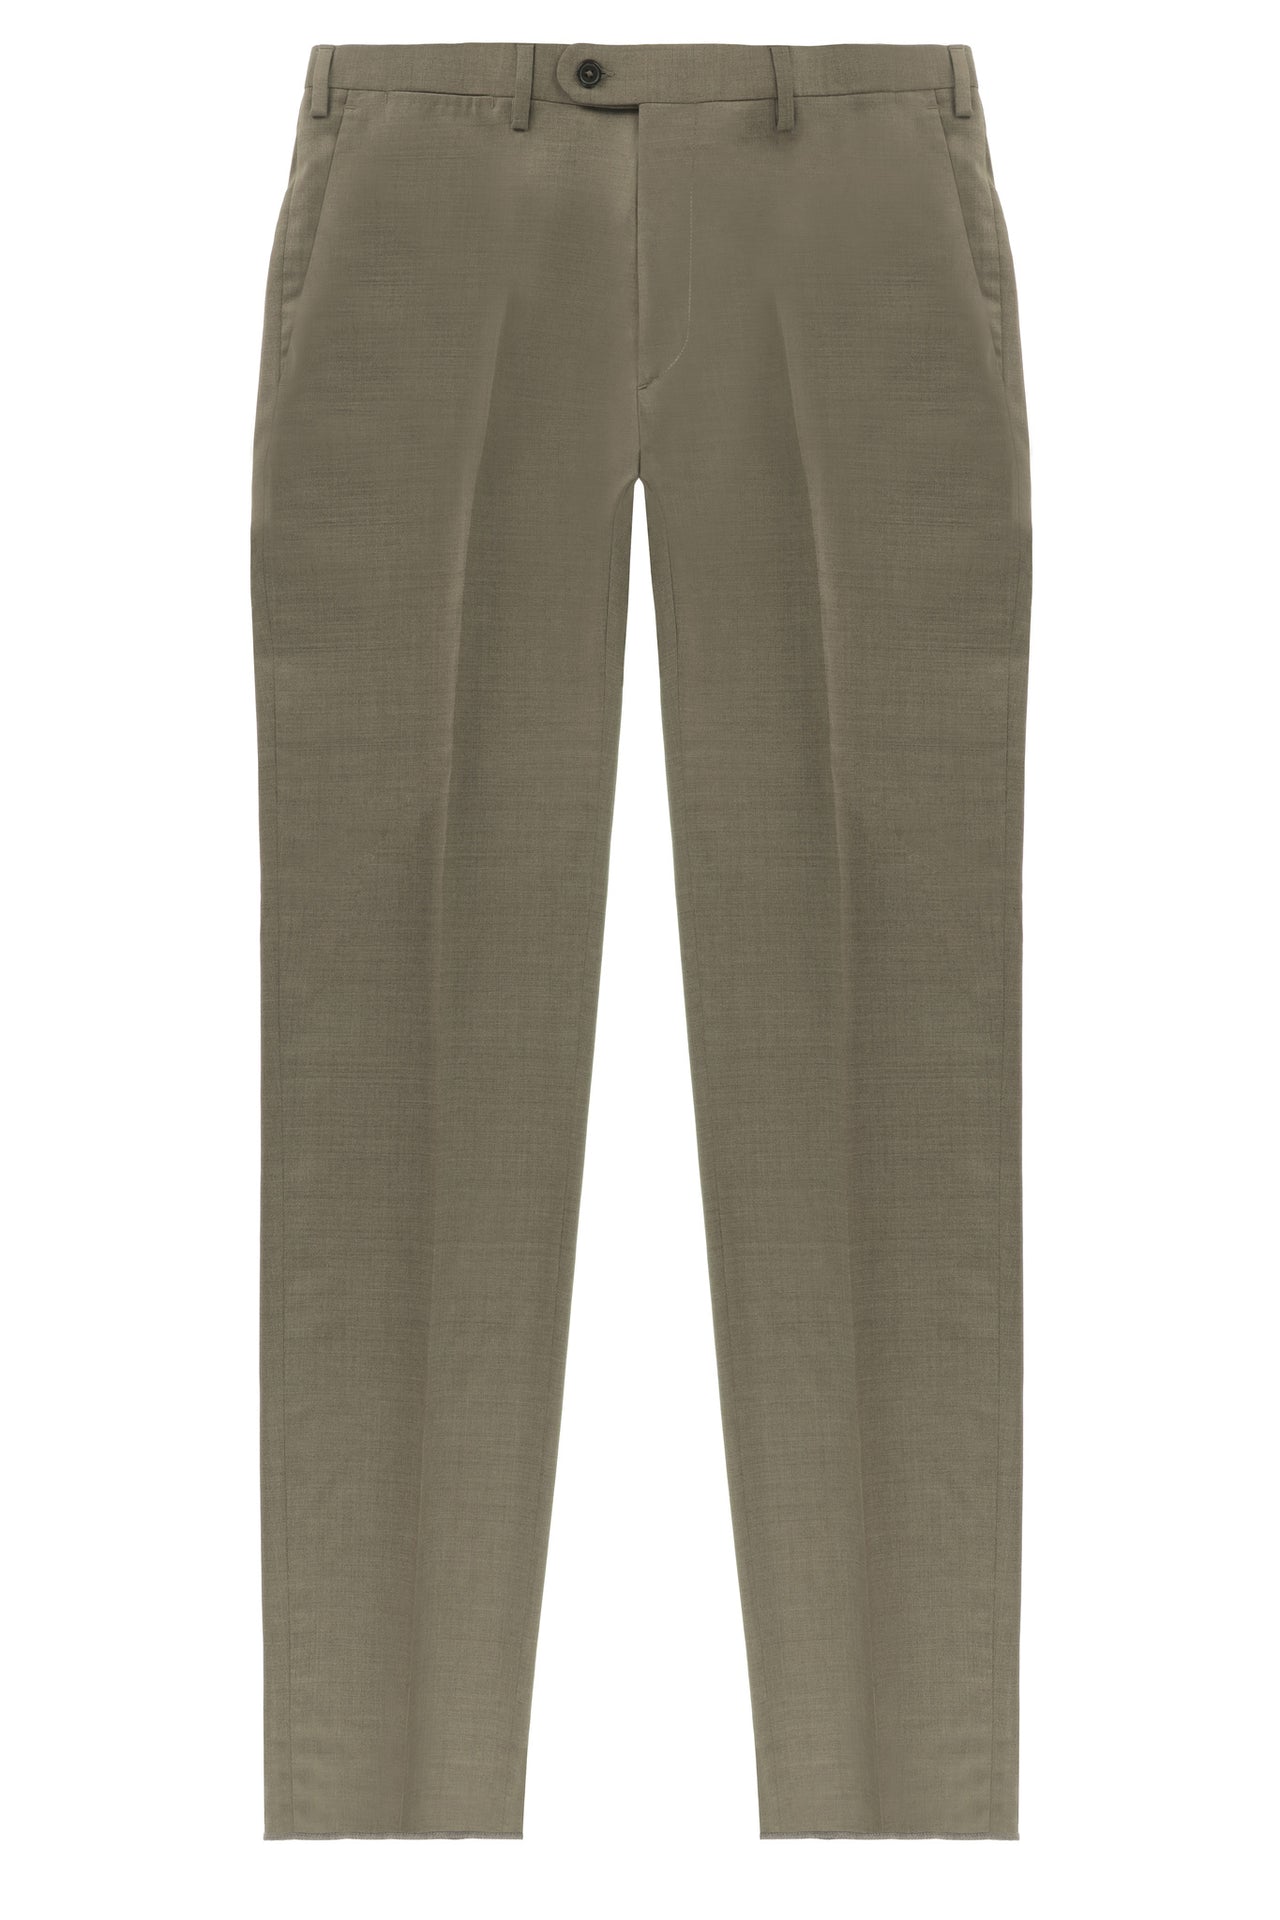 HENRY SARTORIAL Plain Trouser BROWN GREY REG